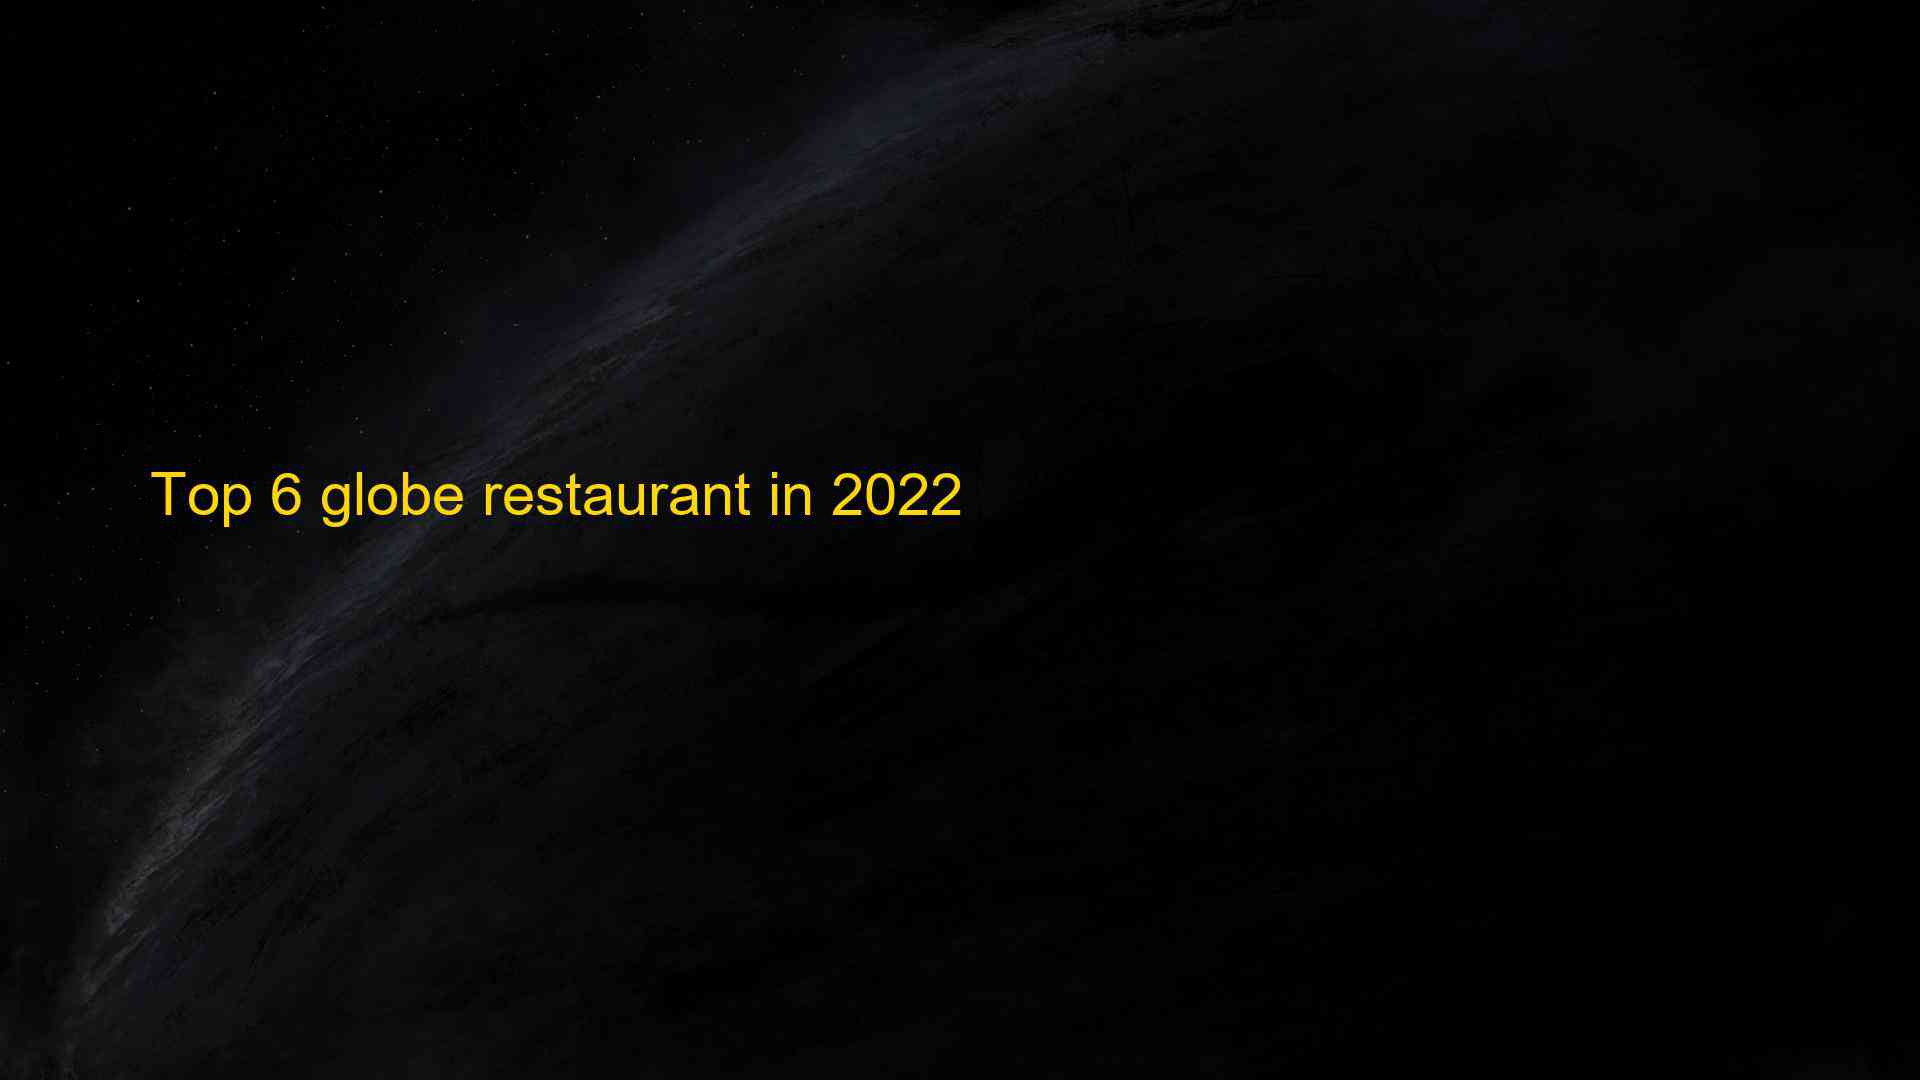 Top 6 globe restaurant in 2022 1662847939